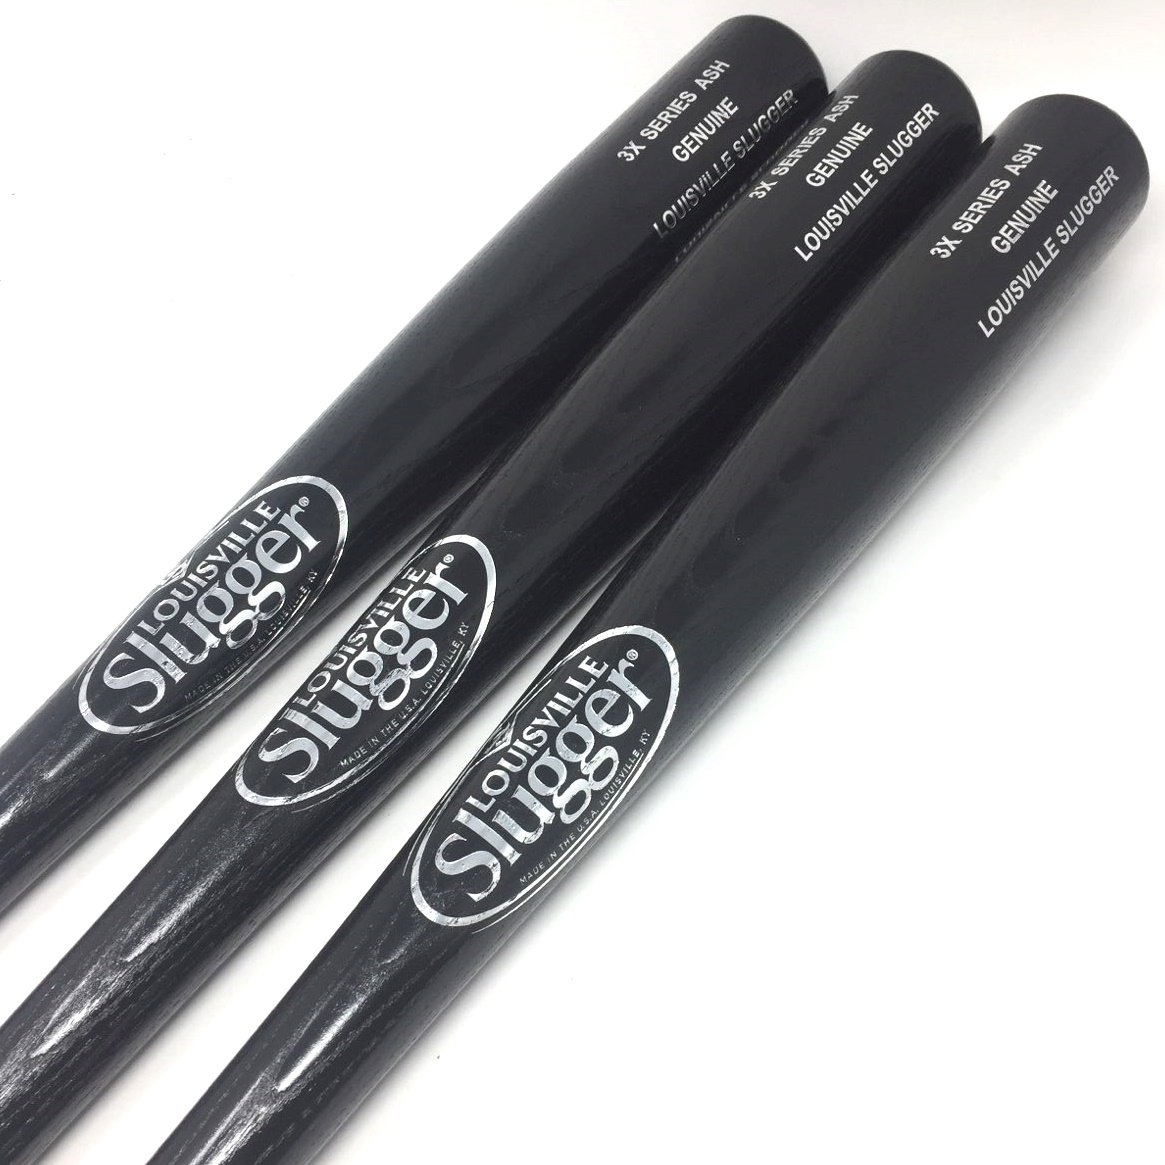 louisville-slugger-wood-baseball-bat-pack-33-inch-3-bats-s3-ash BATPACK-0015 Louisville Does not apply 33 inch wood baseball bats by Louisville Slugger. Series 3 Ash